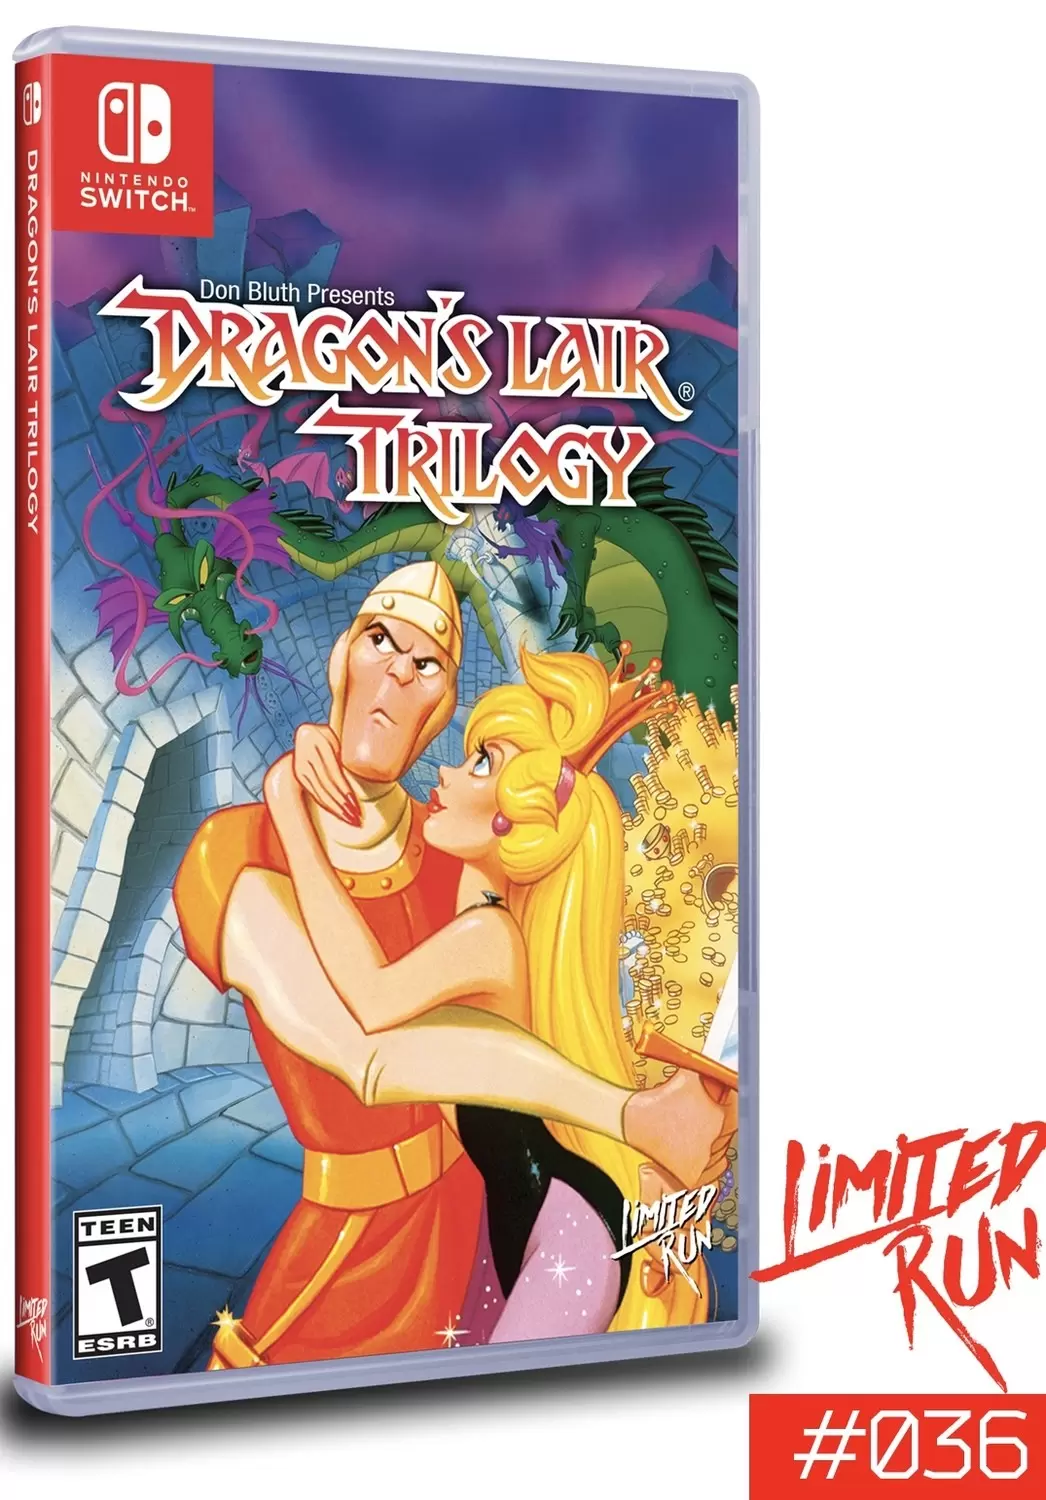 Nintendo Switch Games - Dragon’s Lair Trilogy